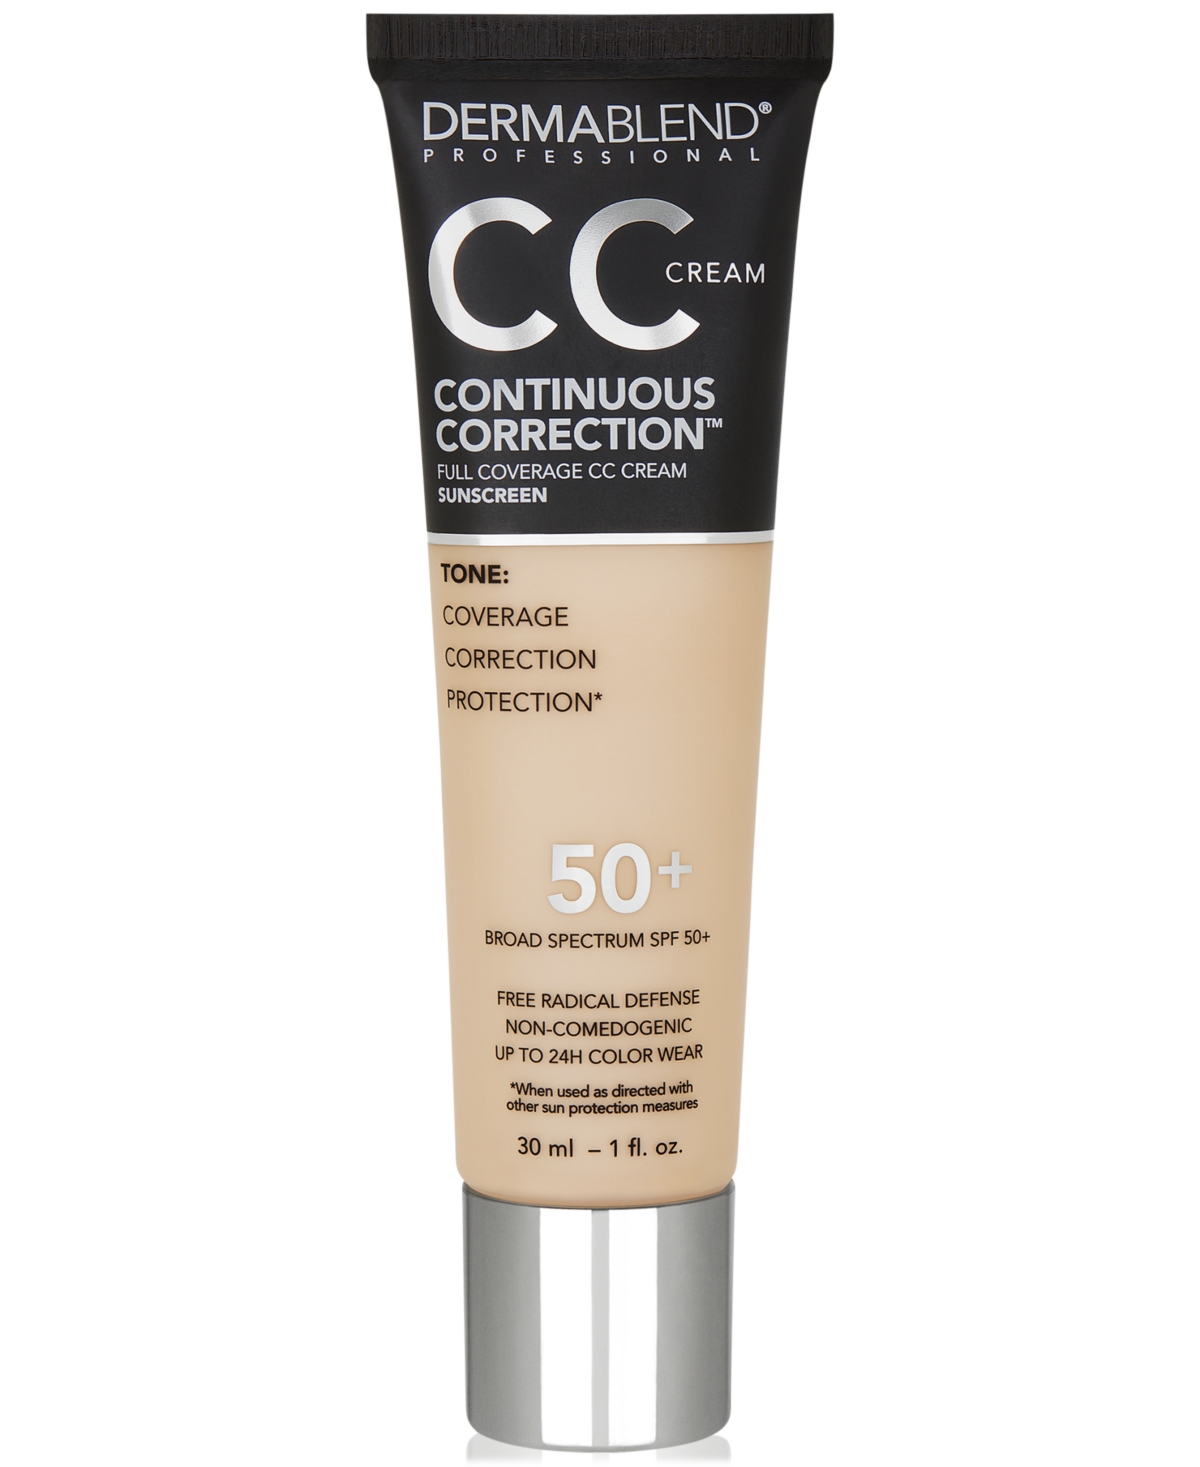 Dermablend Continuous Correction Cc Cream Spf 50+